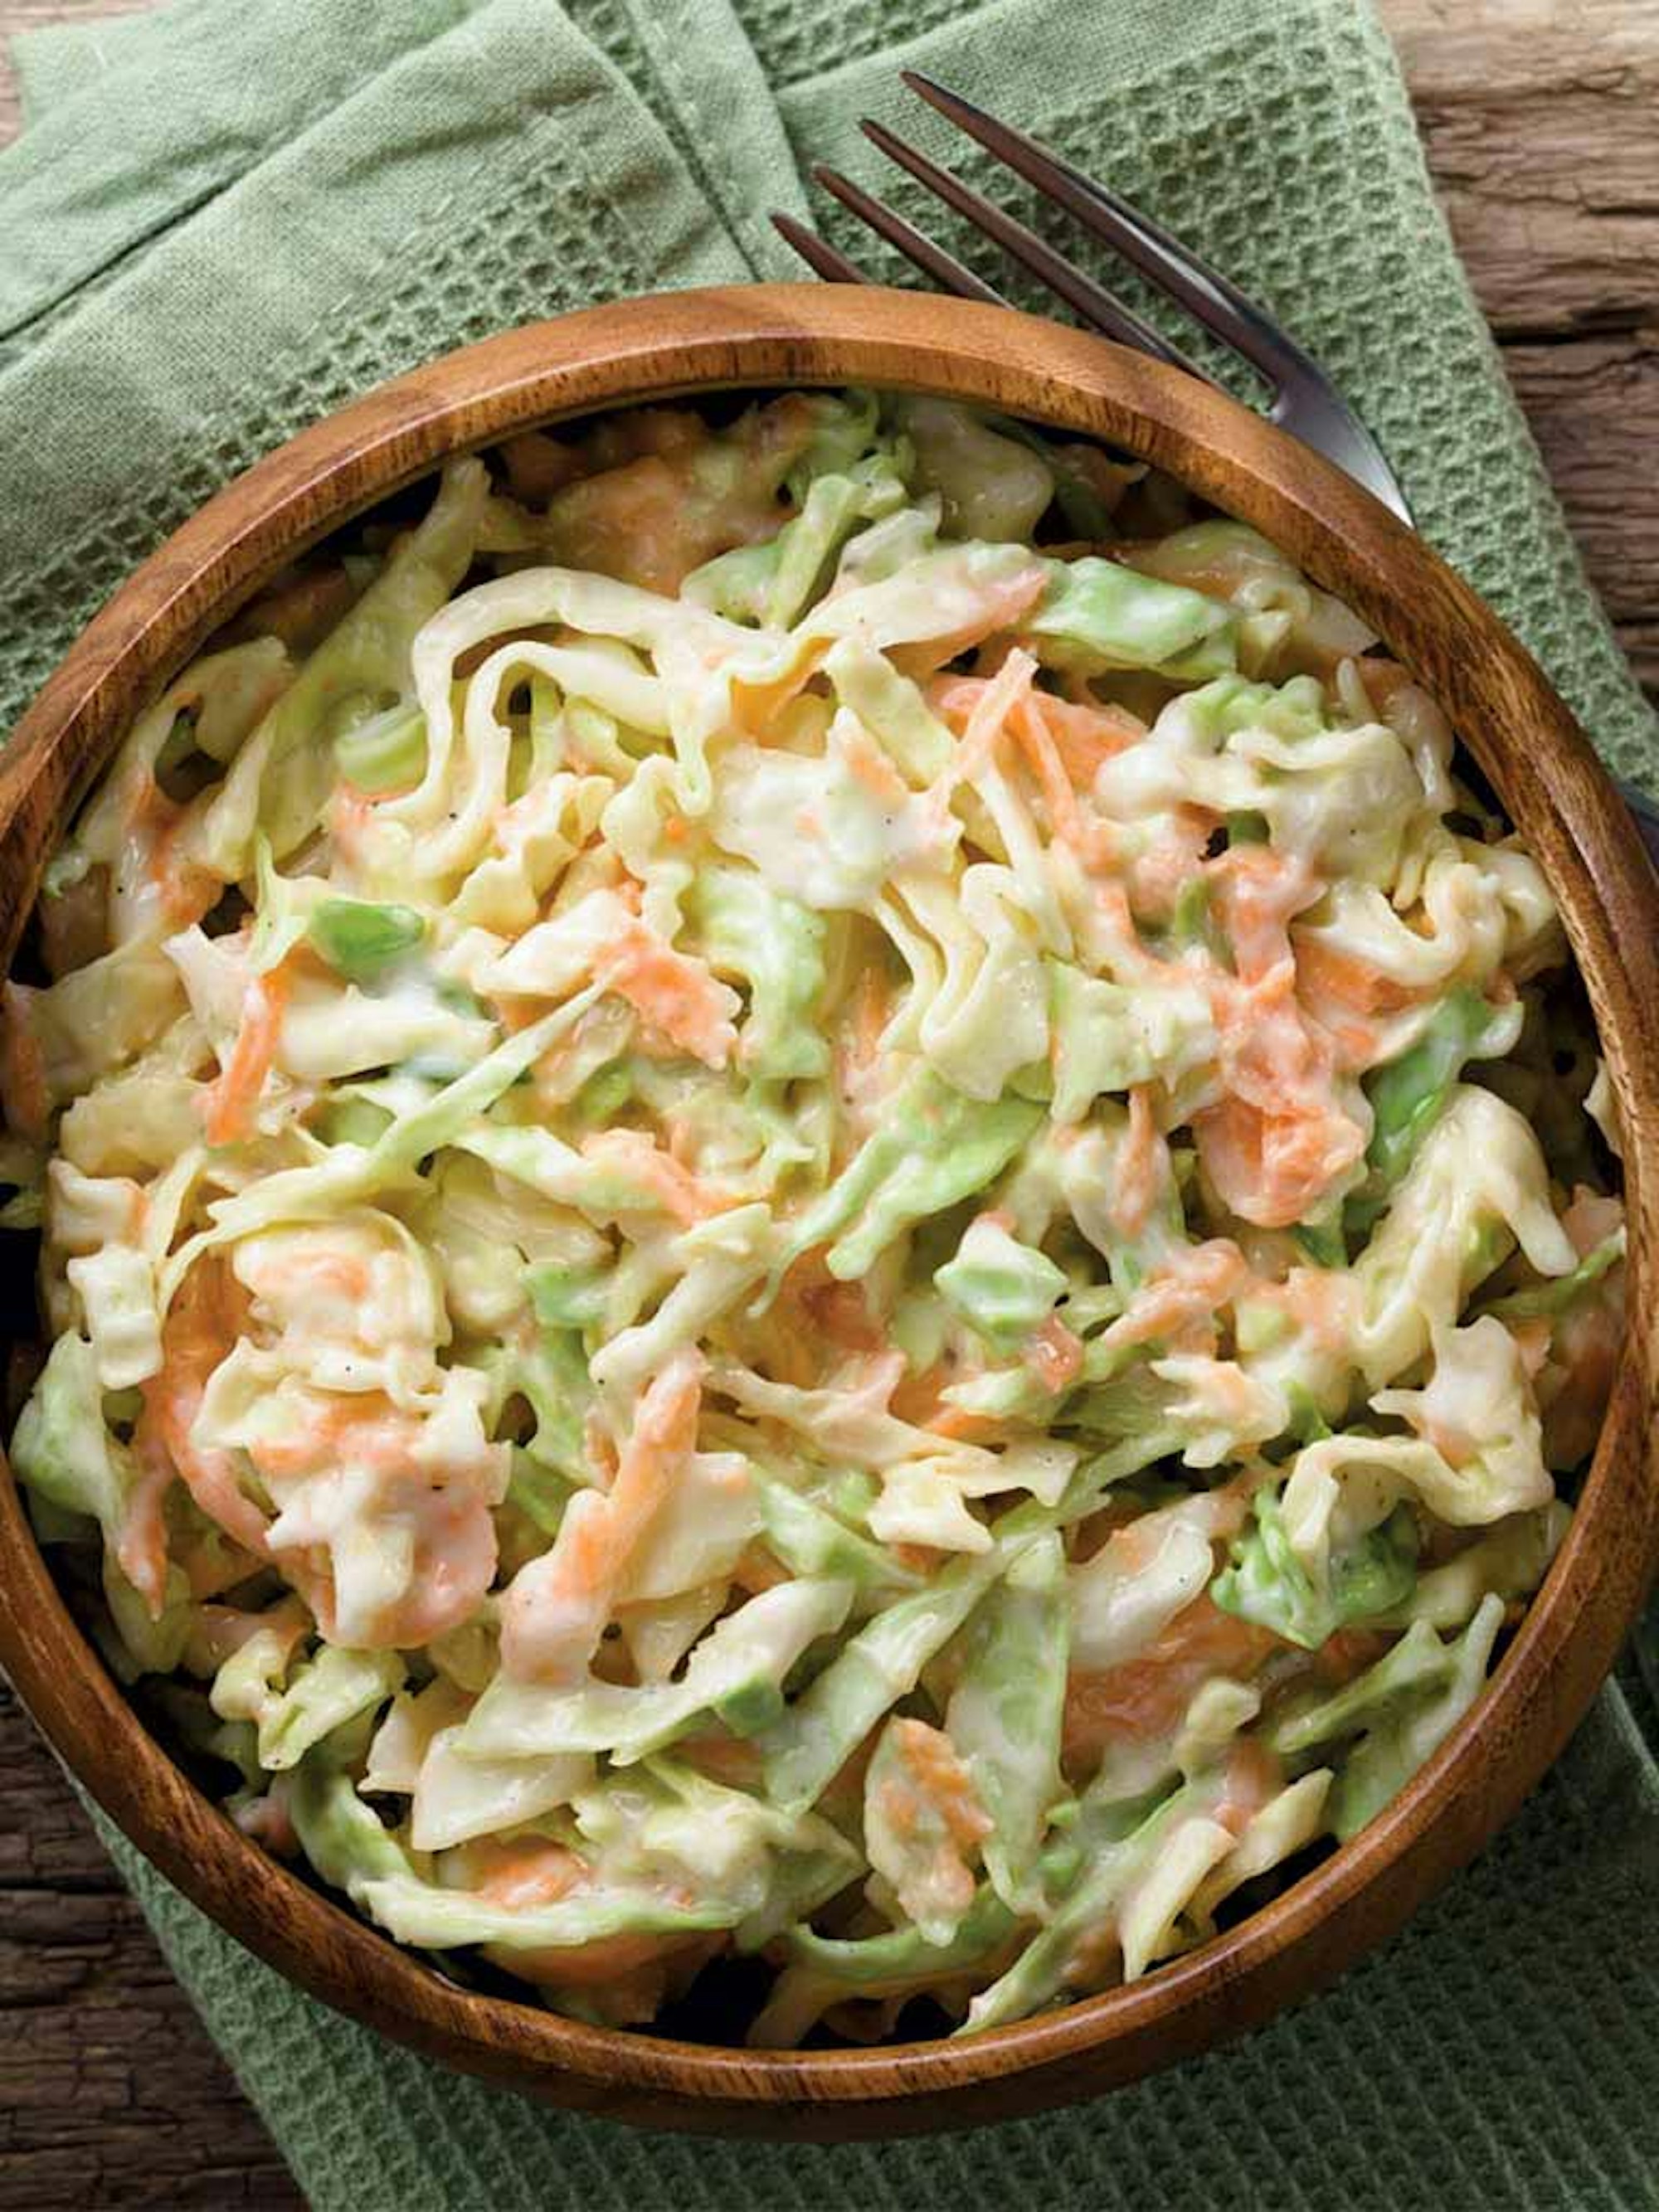 Food Processor Coleslaw Salad recipe | House blog 